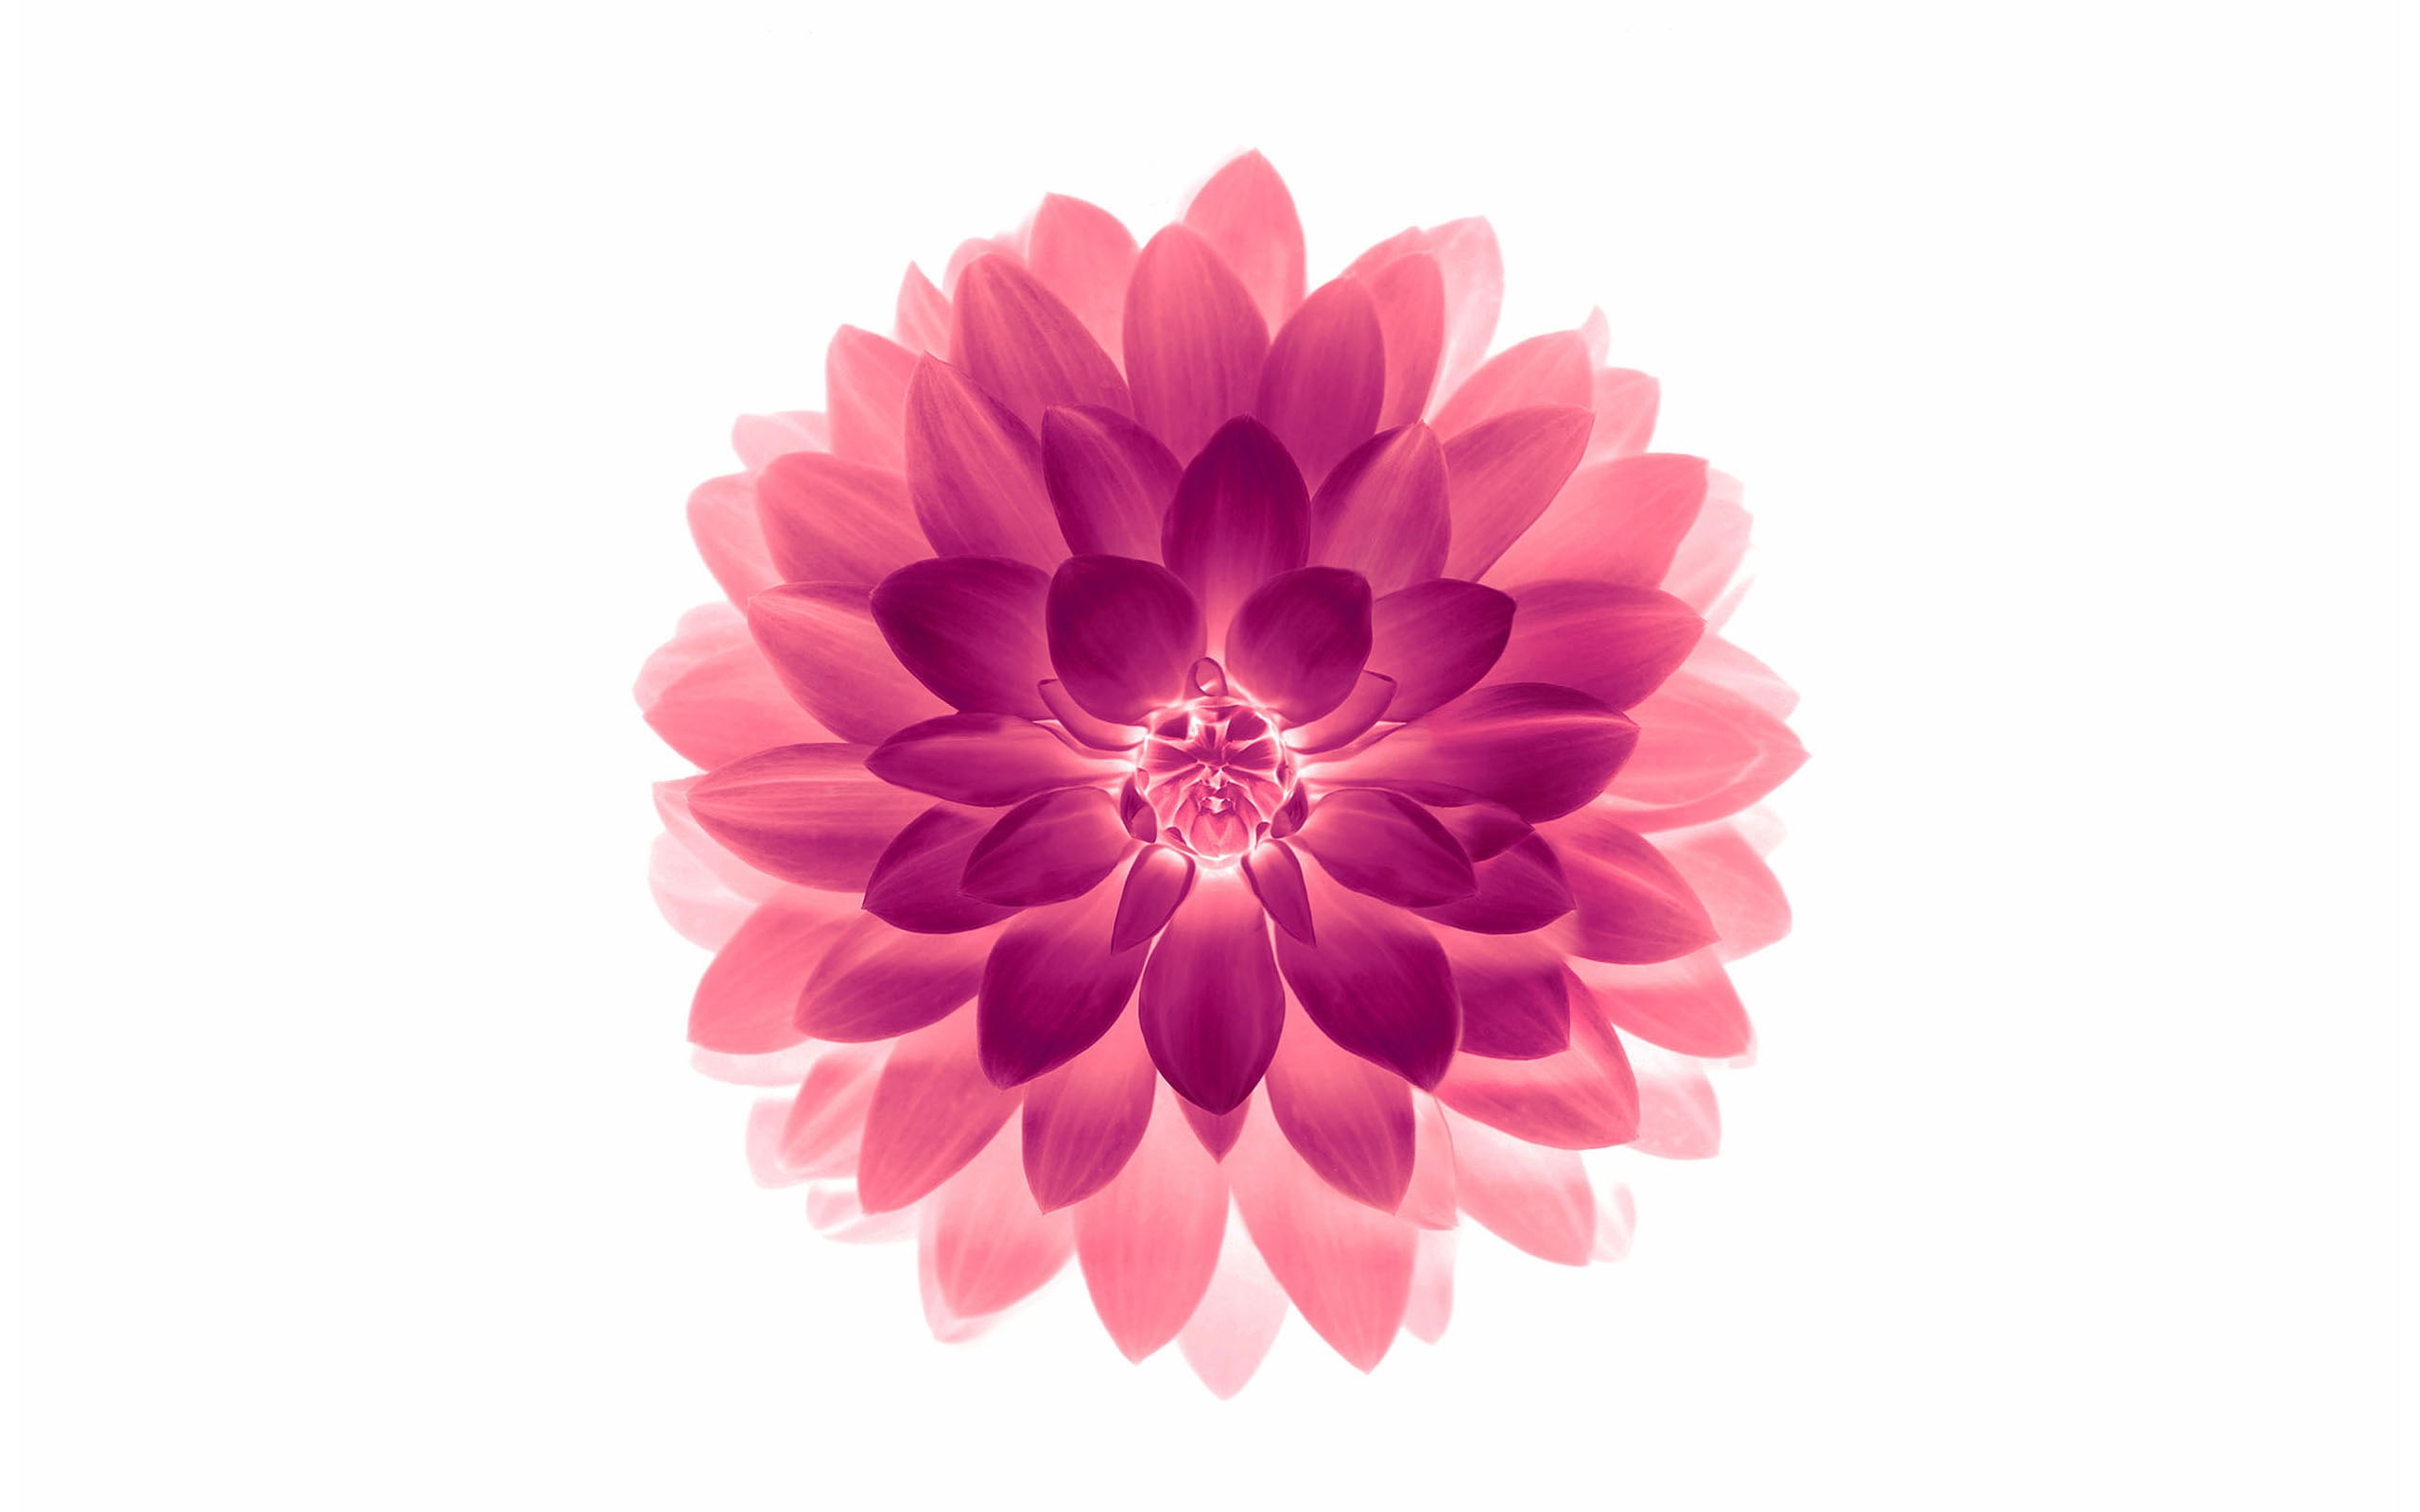 Apple iOS 10 iPhone 7 Plus HD Wallpaper 02, pink dahlia flower